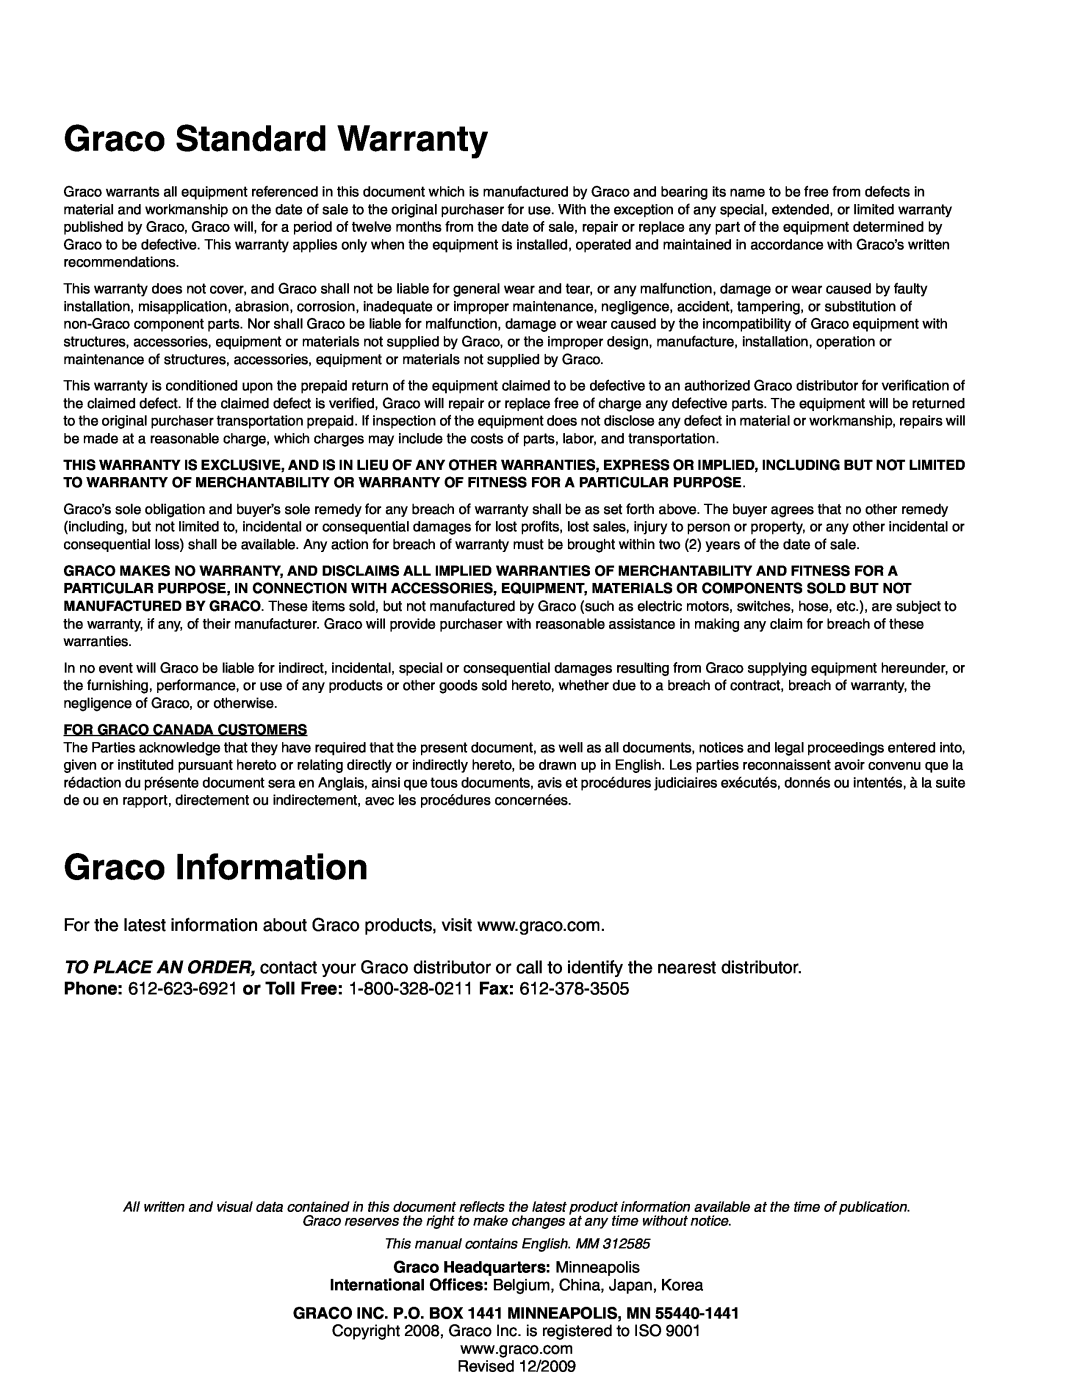 Graco Inc 247551, 247553, 247552, 247554, 258665 Graco Standard Warranty, Graco Information, Graco Headquarters Minneapolis 